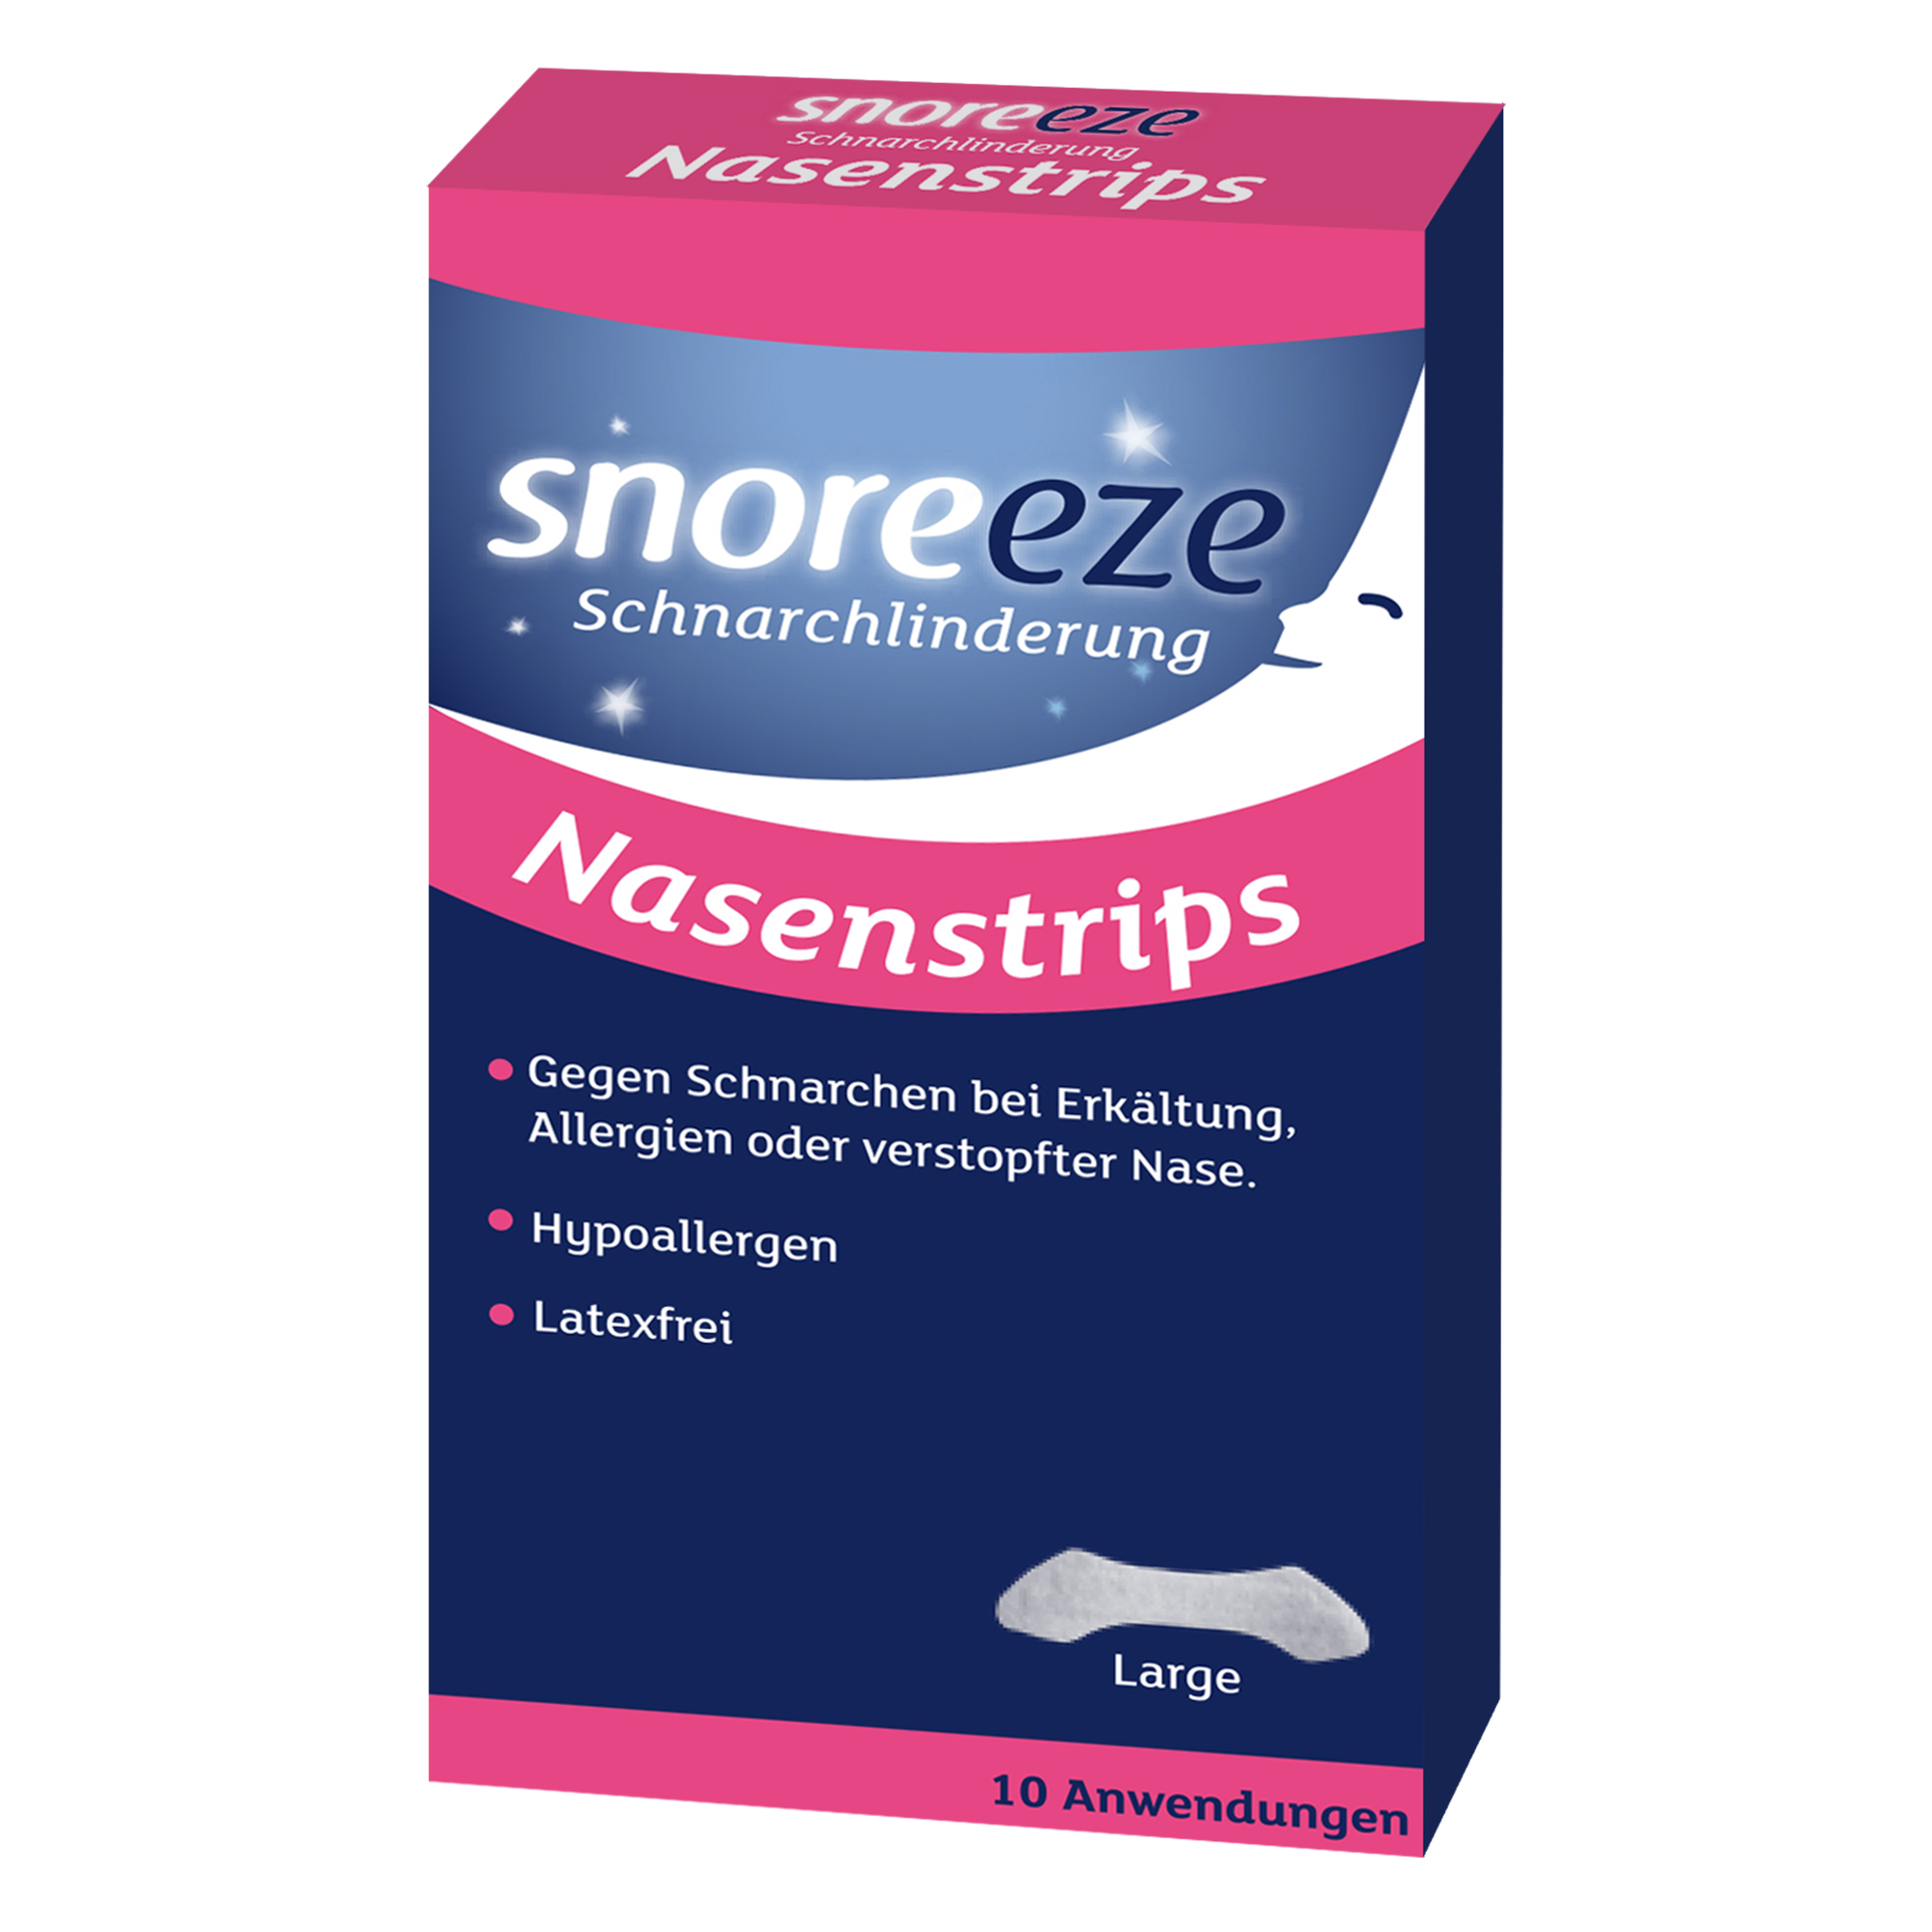 Snoreeze Nasenstrips Large